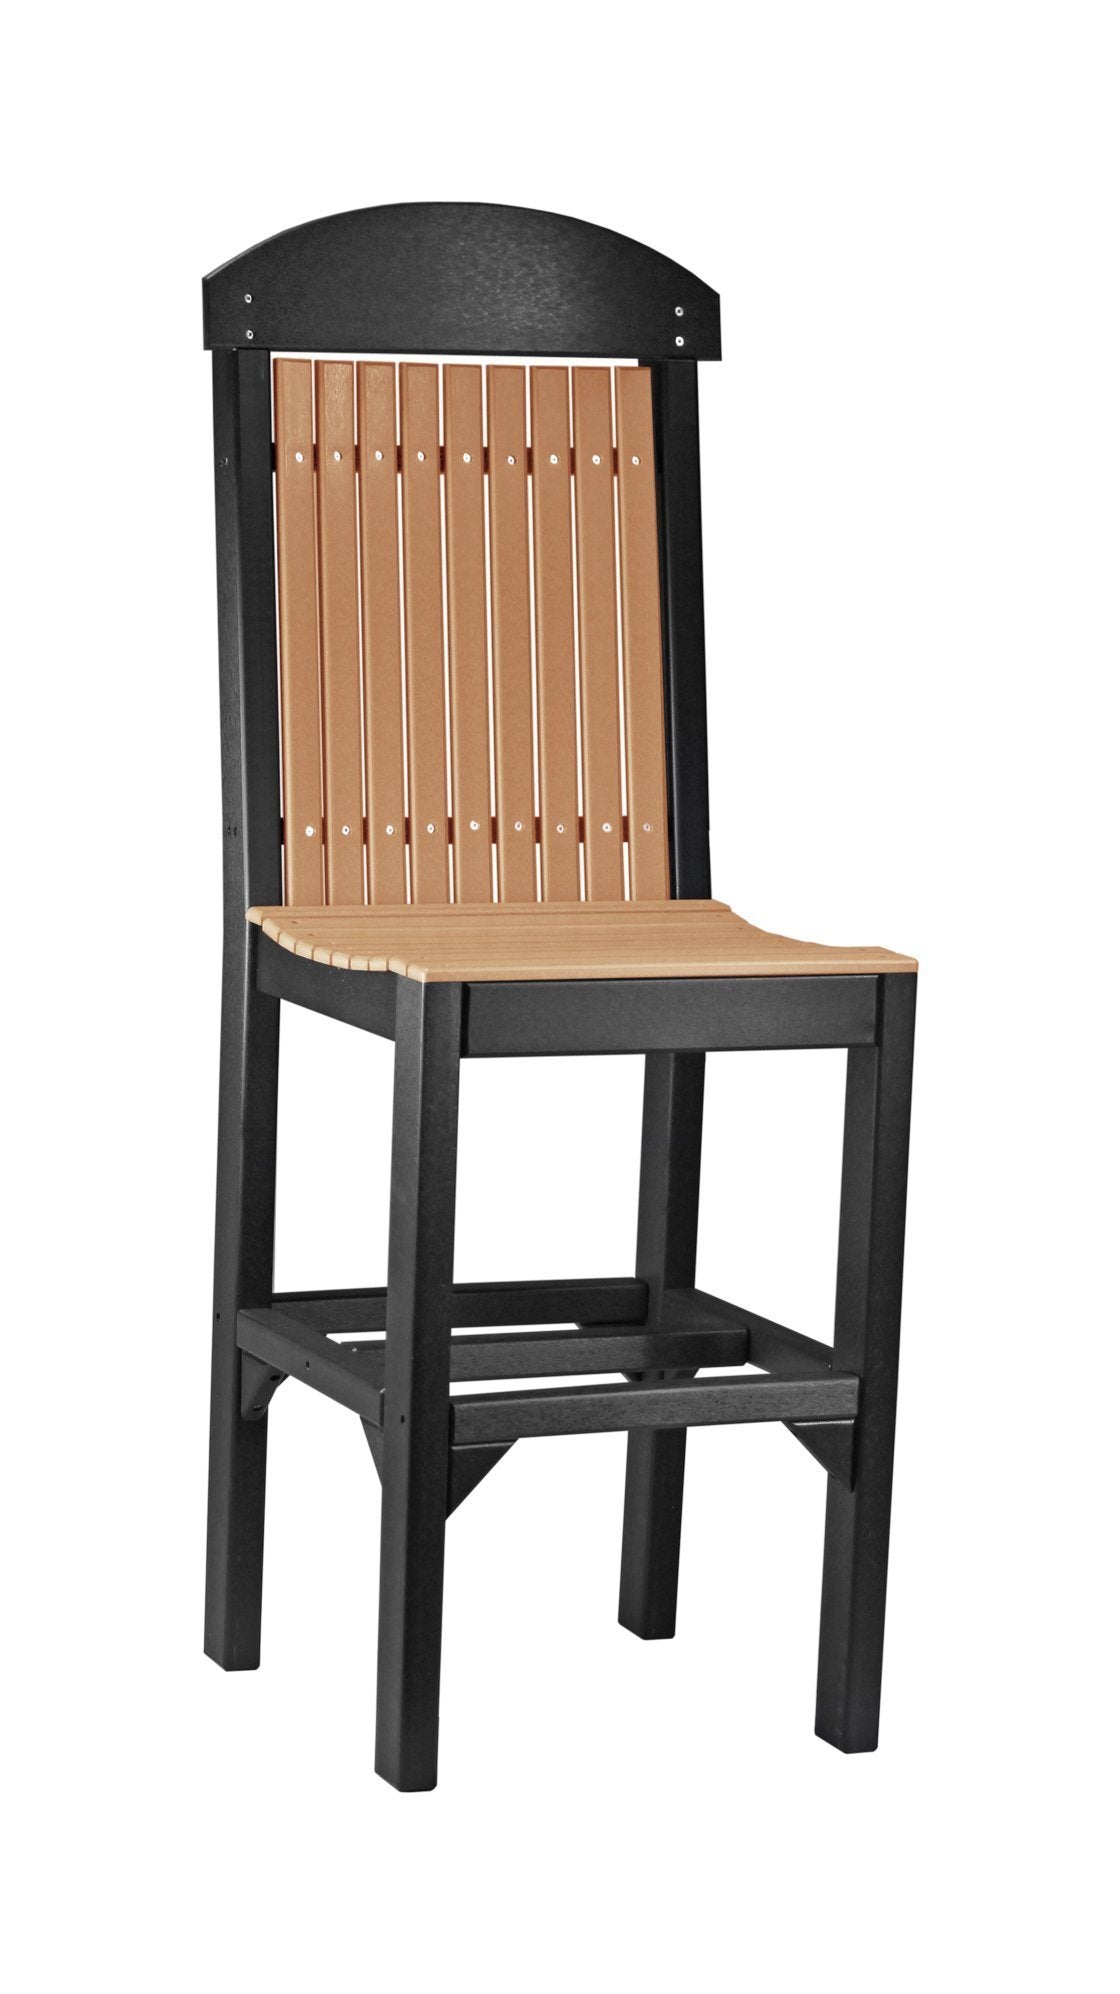 Luxcraft PolyTuf Outdoor Chair